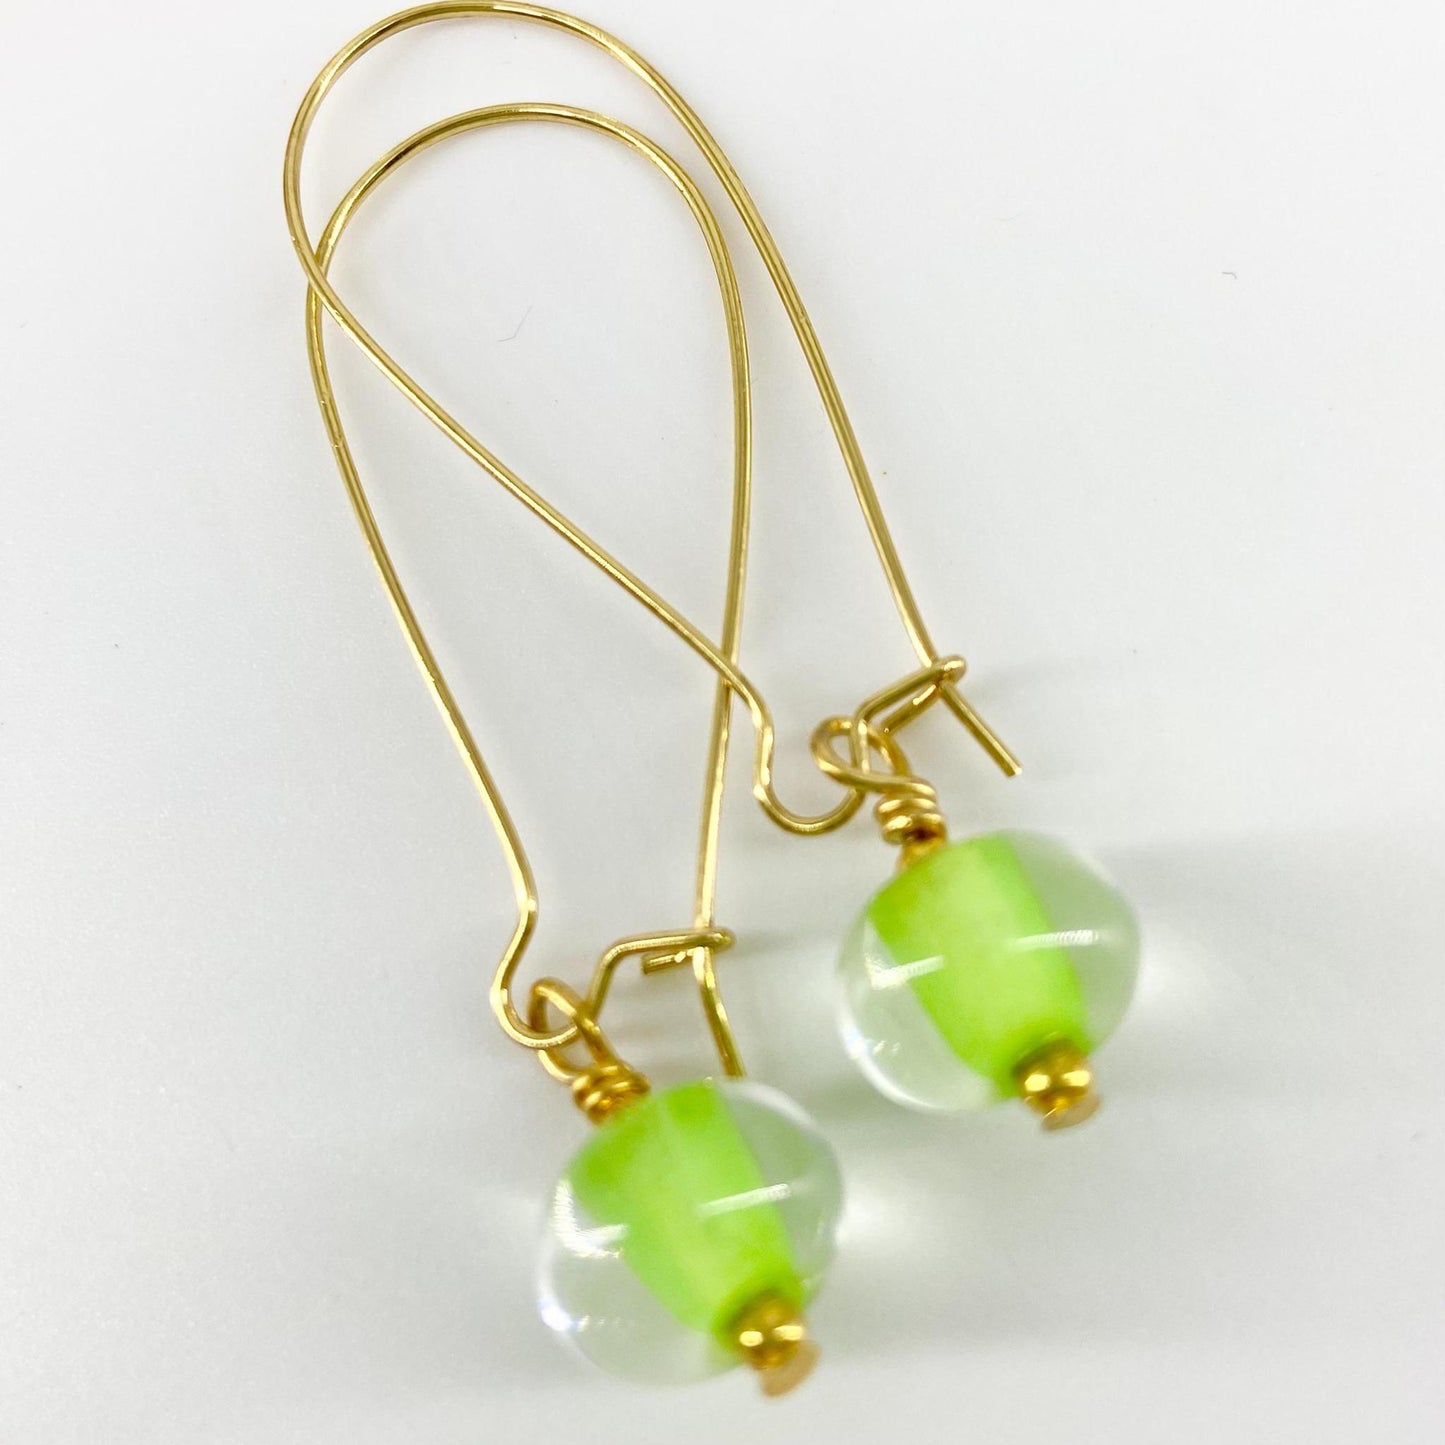 Earrings - Encased Lime Green - Glass & Goldfill Long Wire (Video)